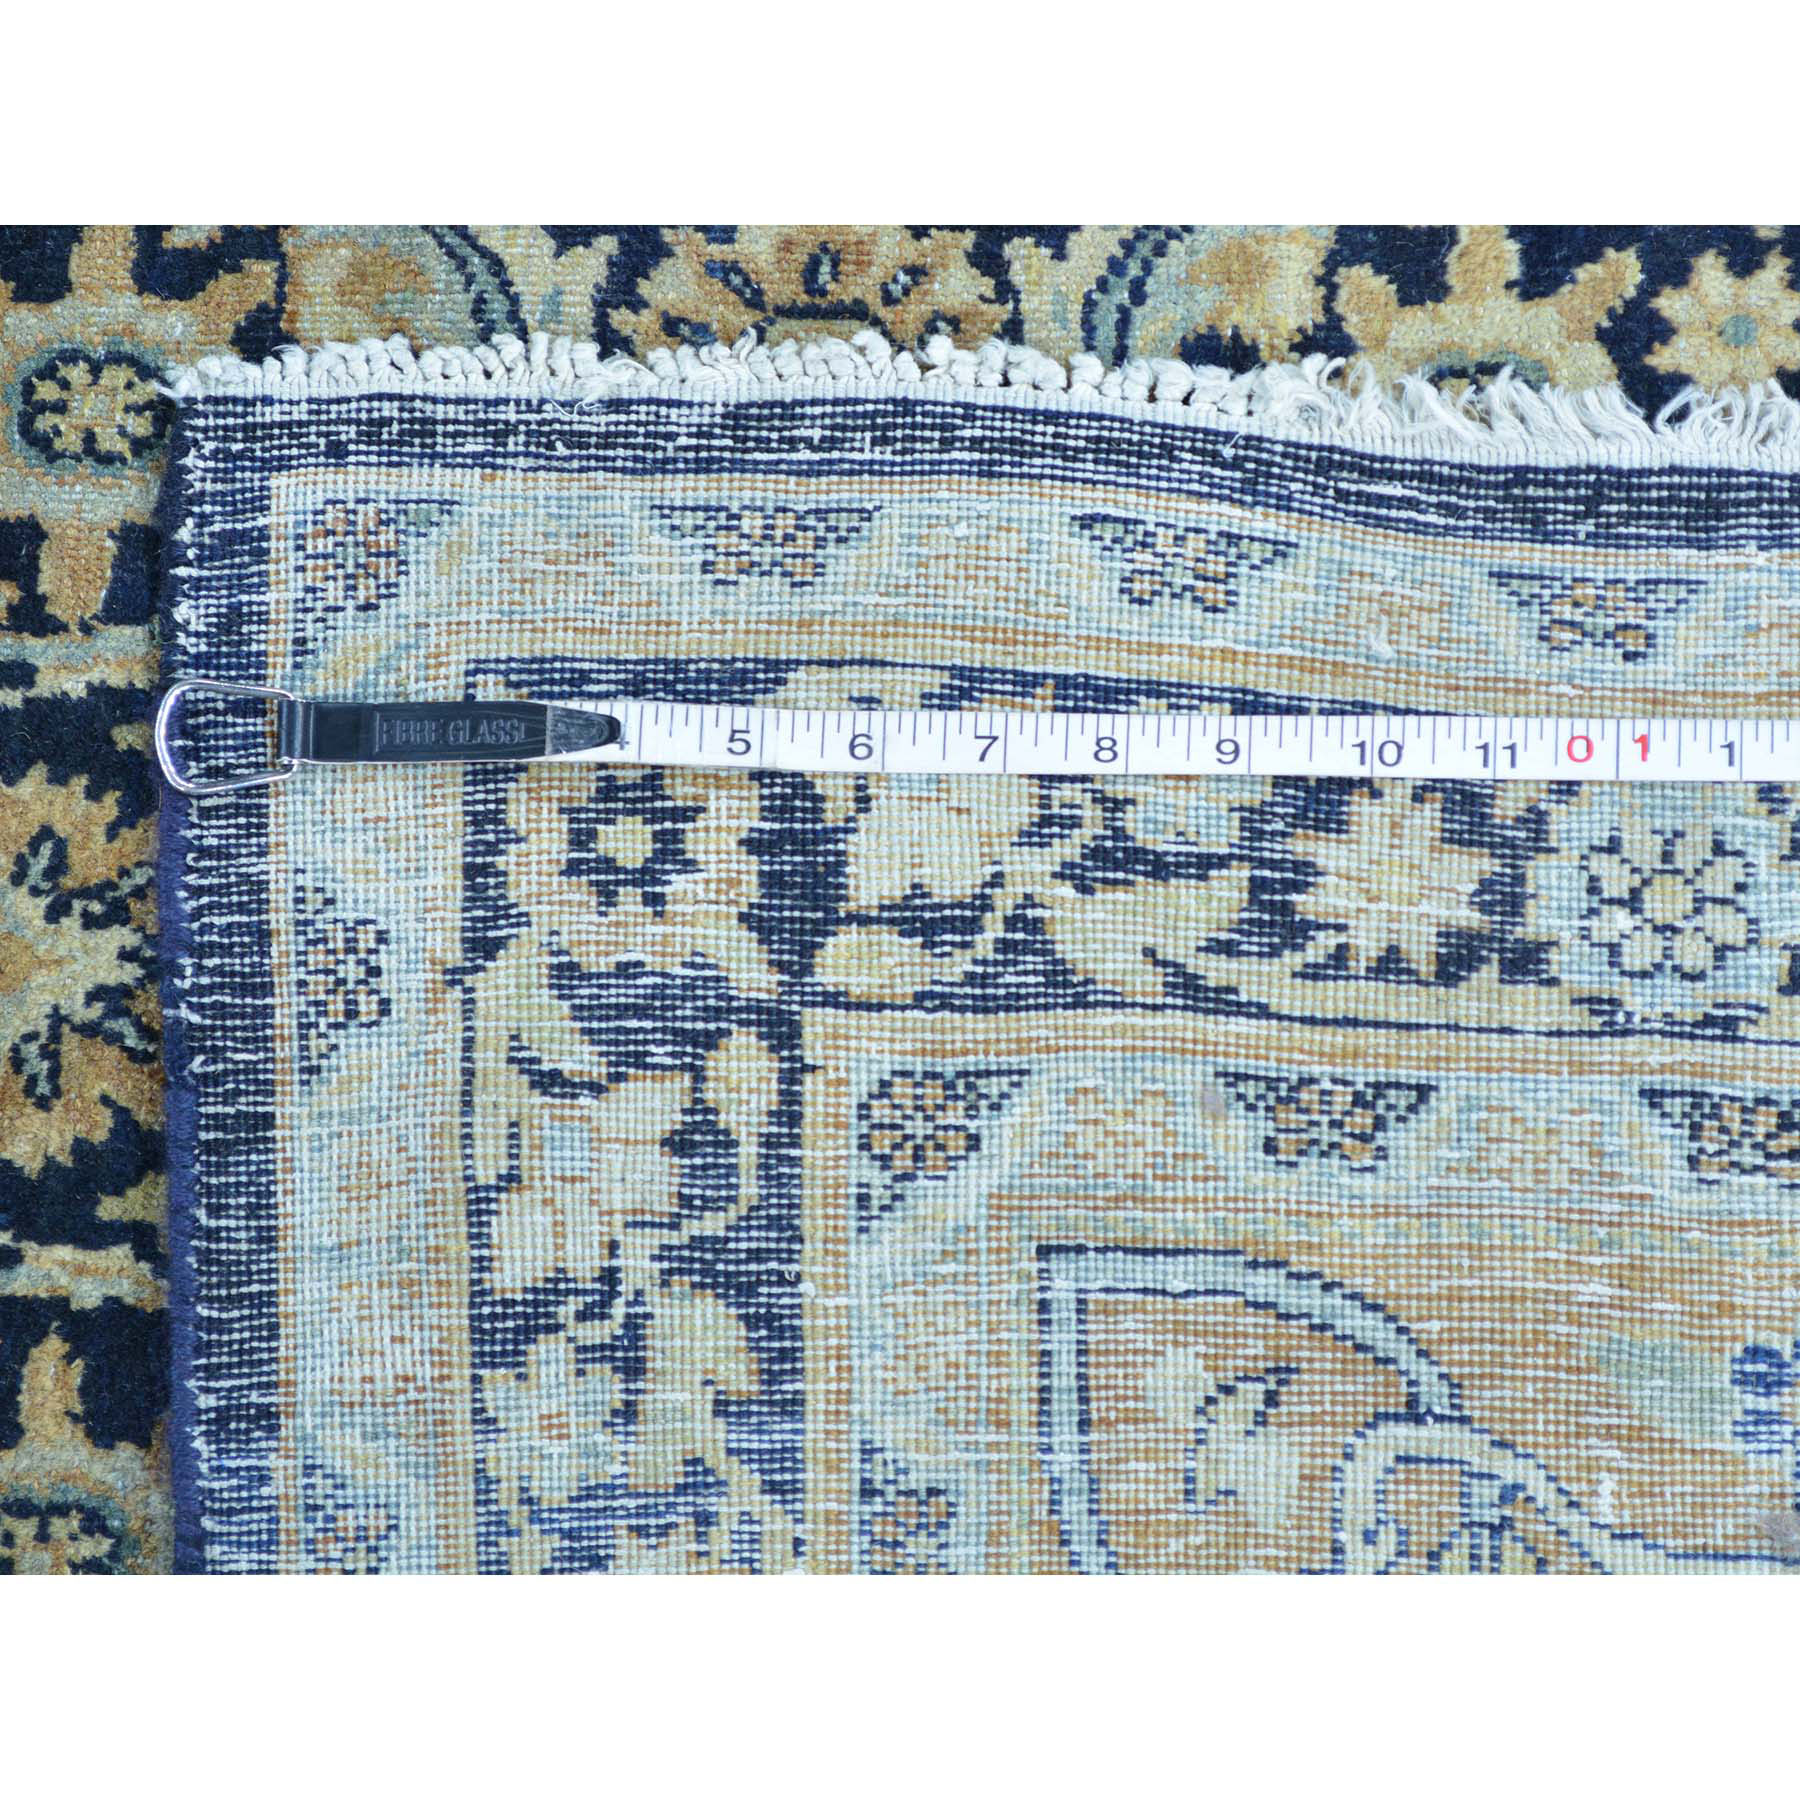 10'10"x17' Navy Blue Gallery Size Antique Persian Kerman Herati Design Rug 